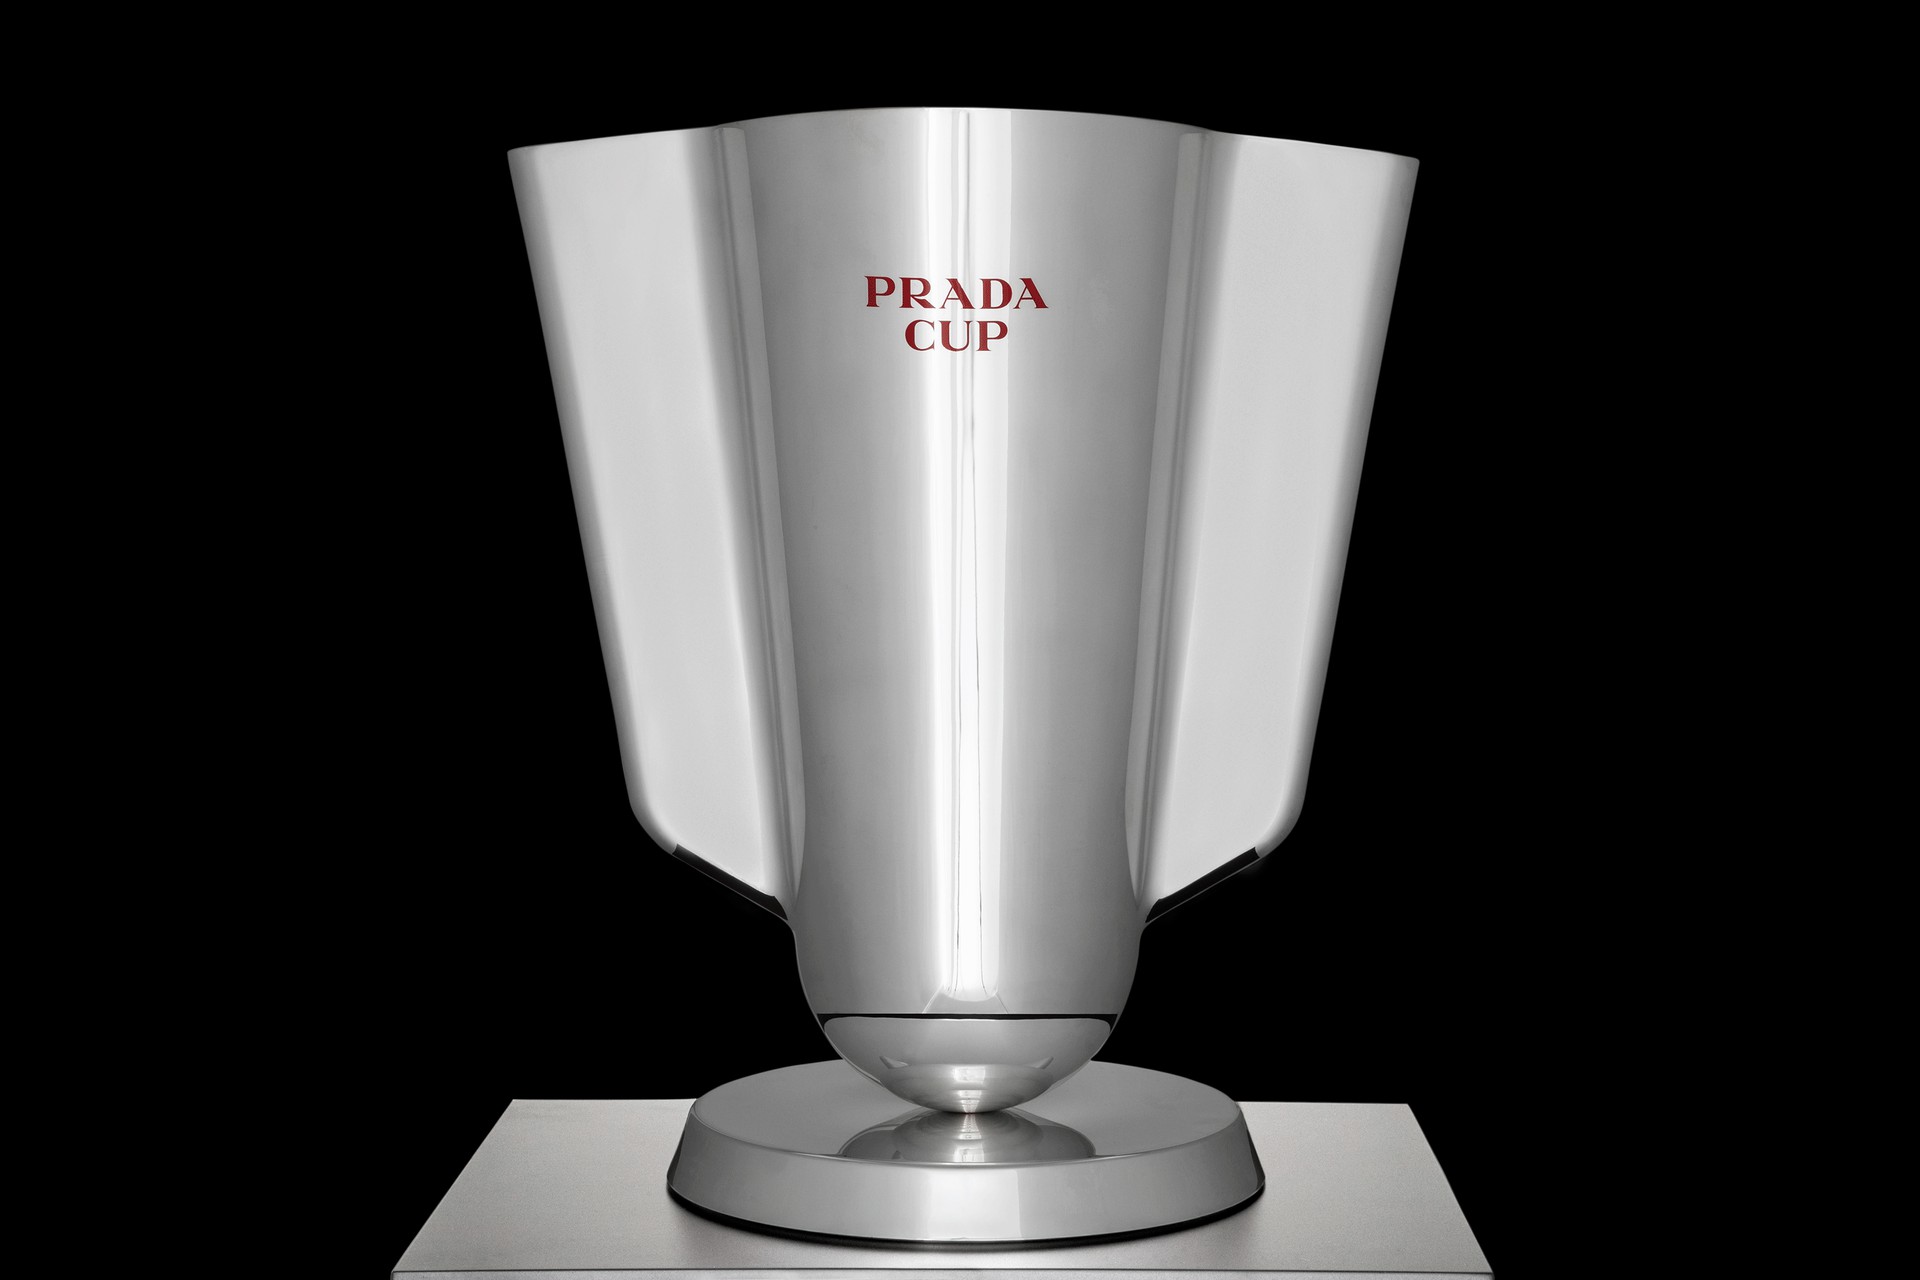 36th America’s Cup - The Prada Cup Trophy, Logos & Buoys